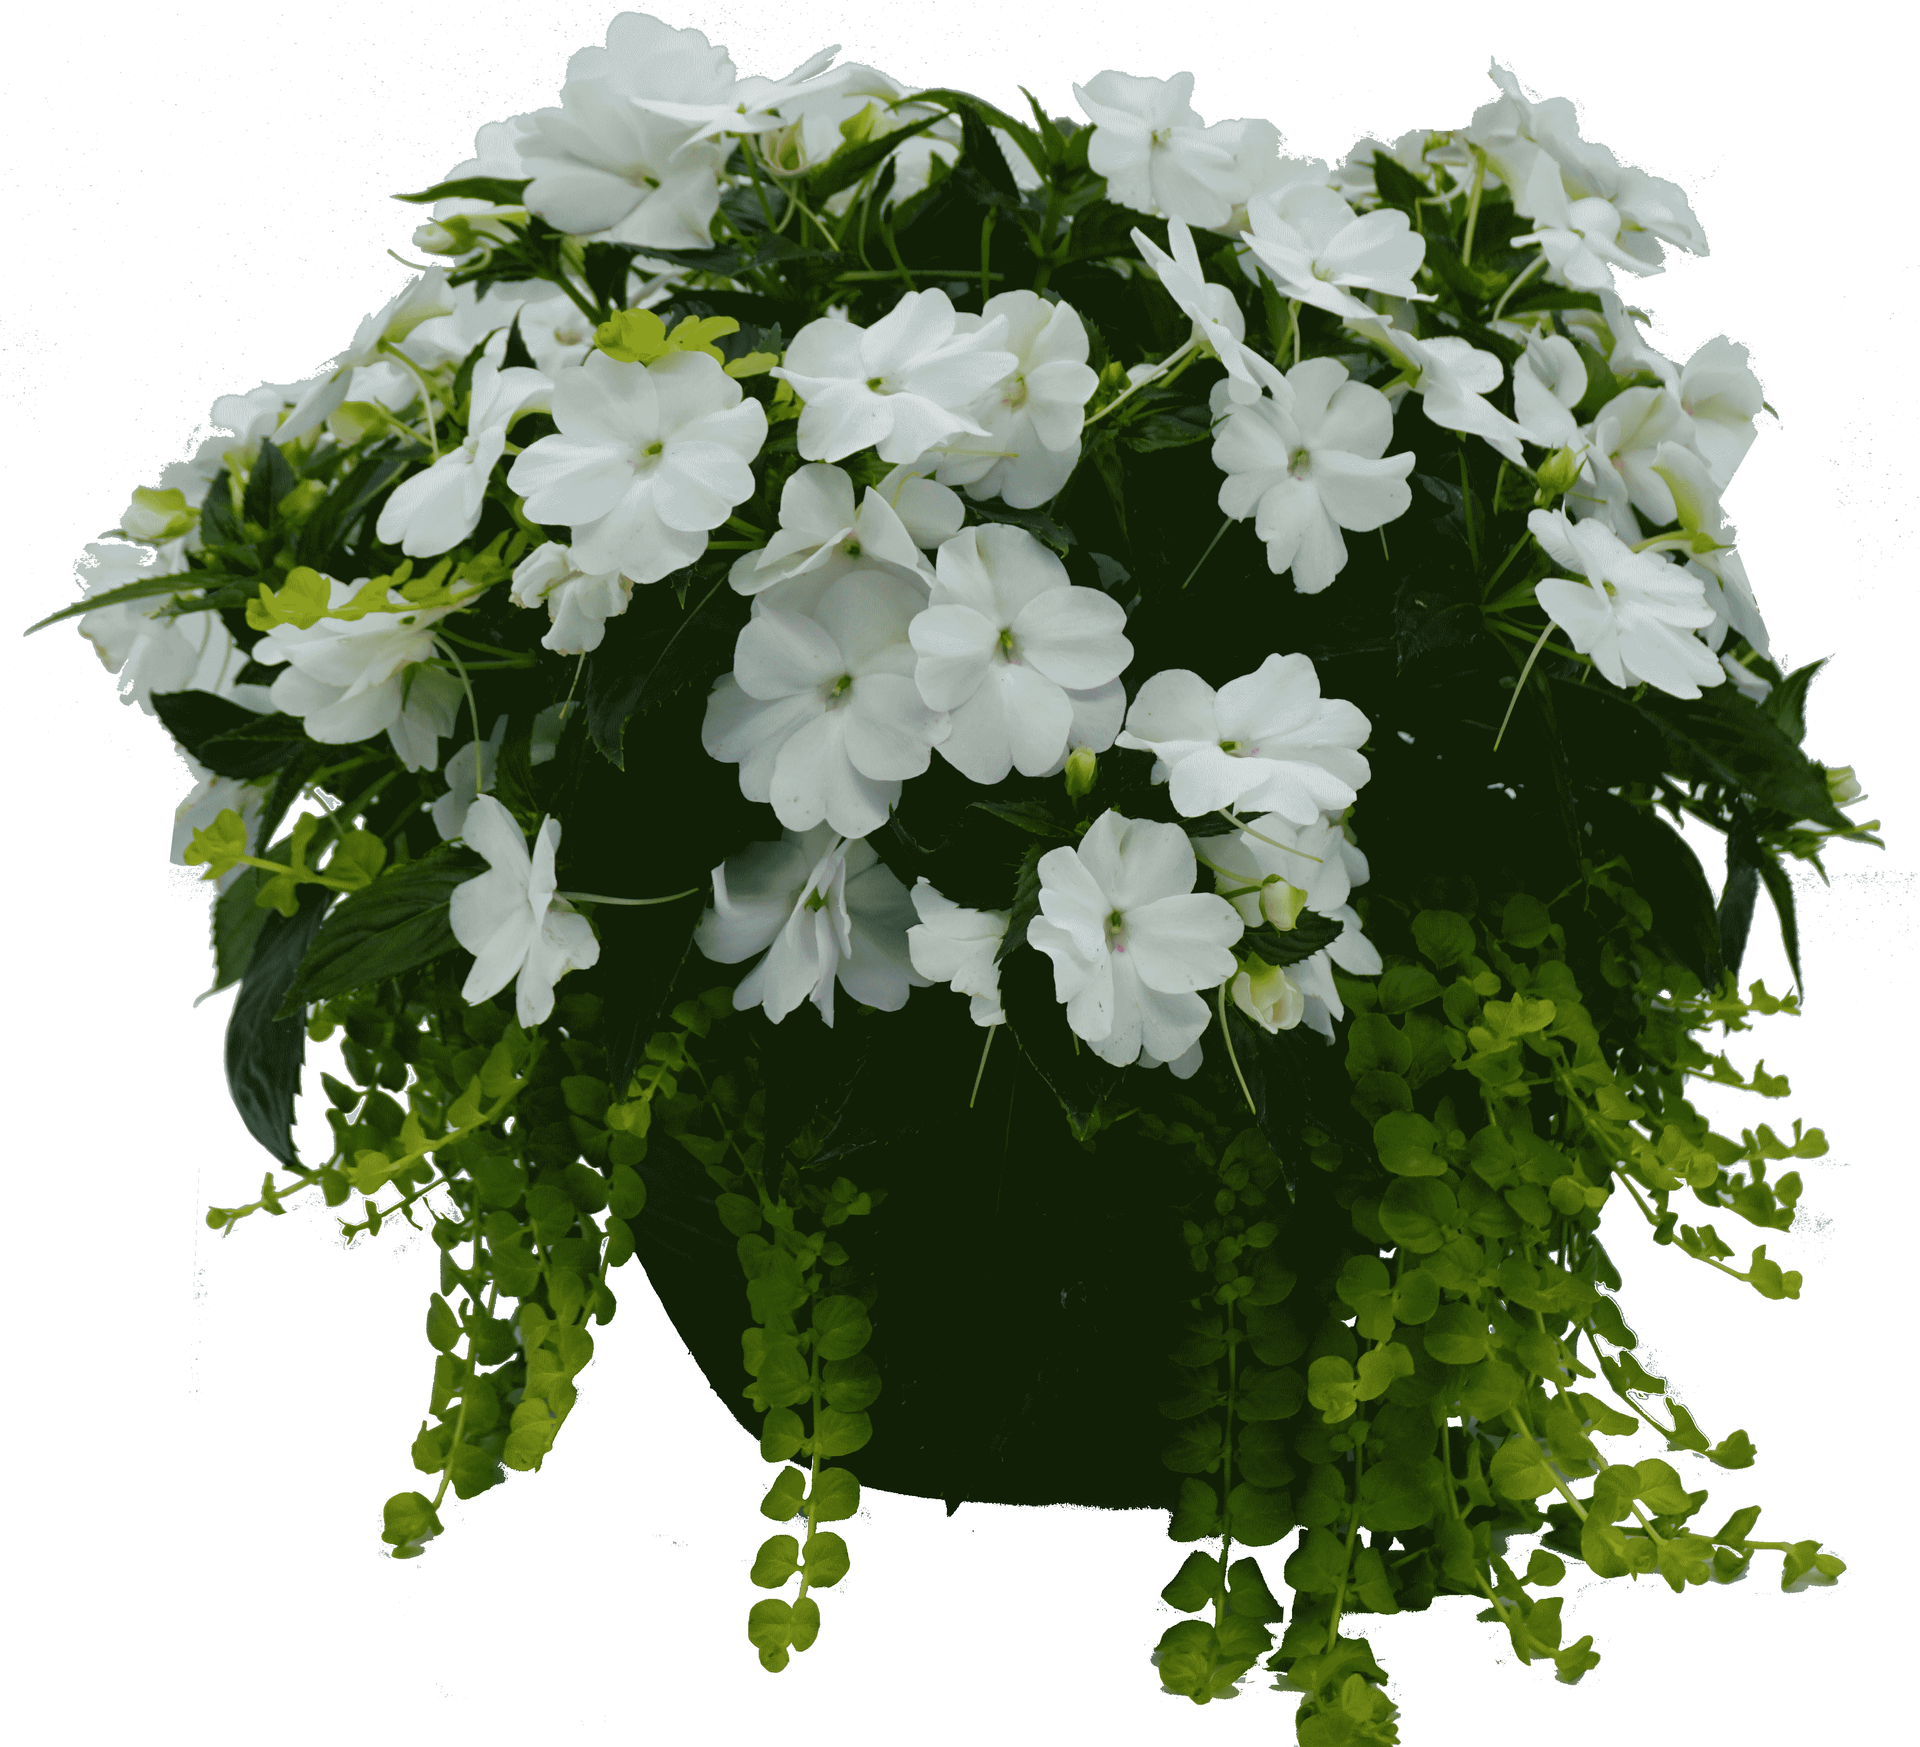 White Impatiens Sunpatiens Hanging Basket flowers for sale in Lebanon PA